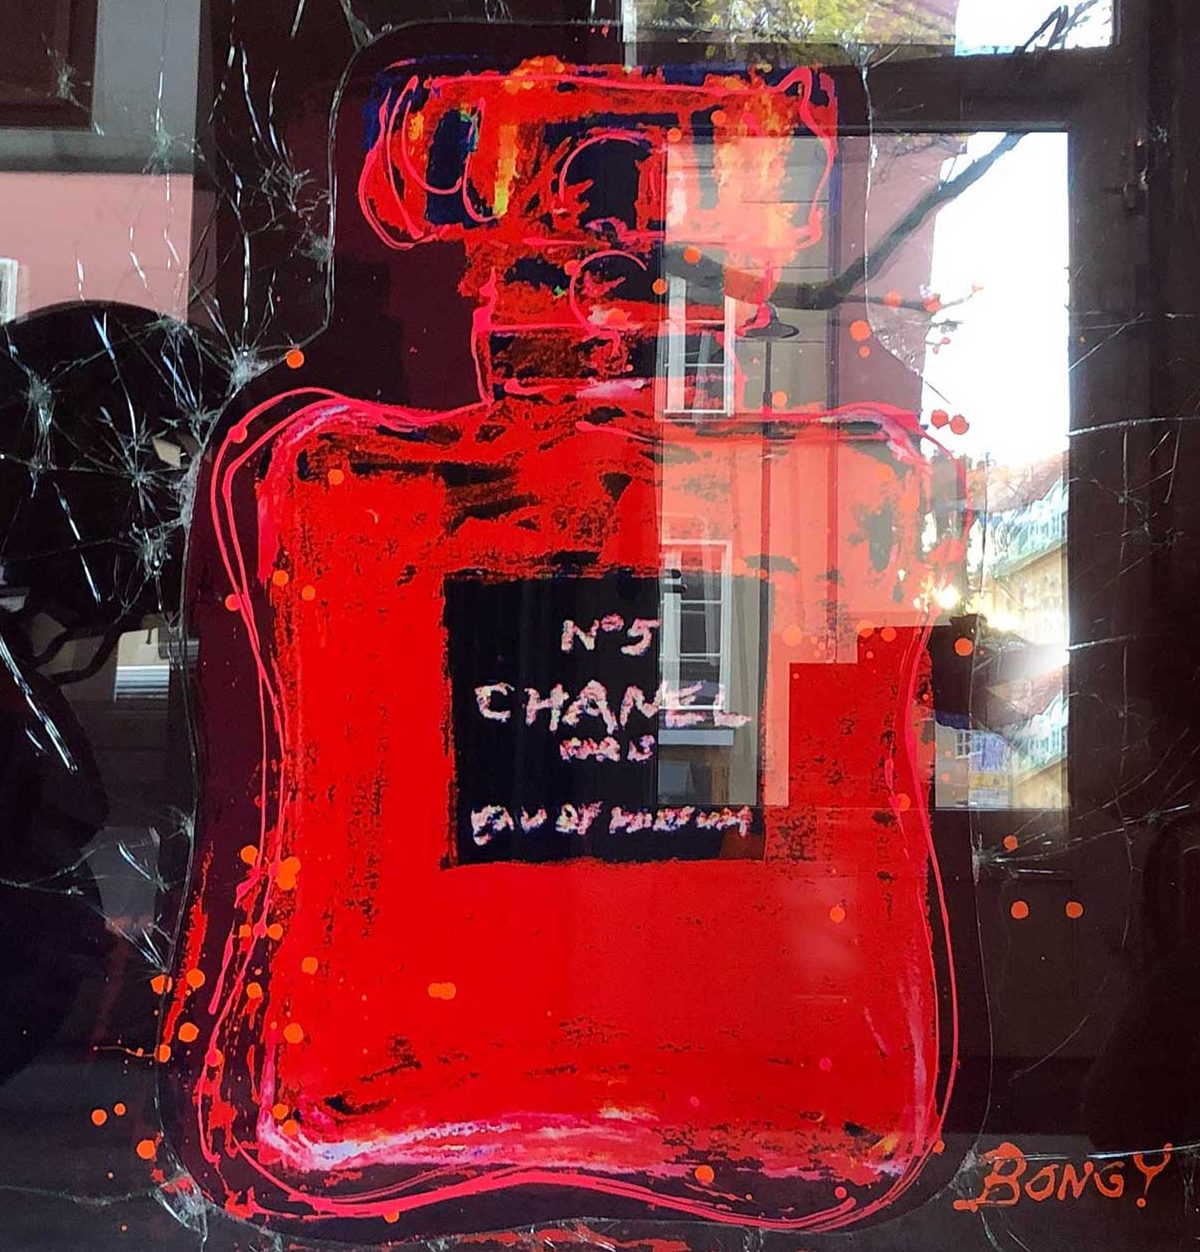 Chanel-inramad-1x1m-krossat-glas